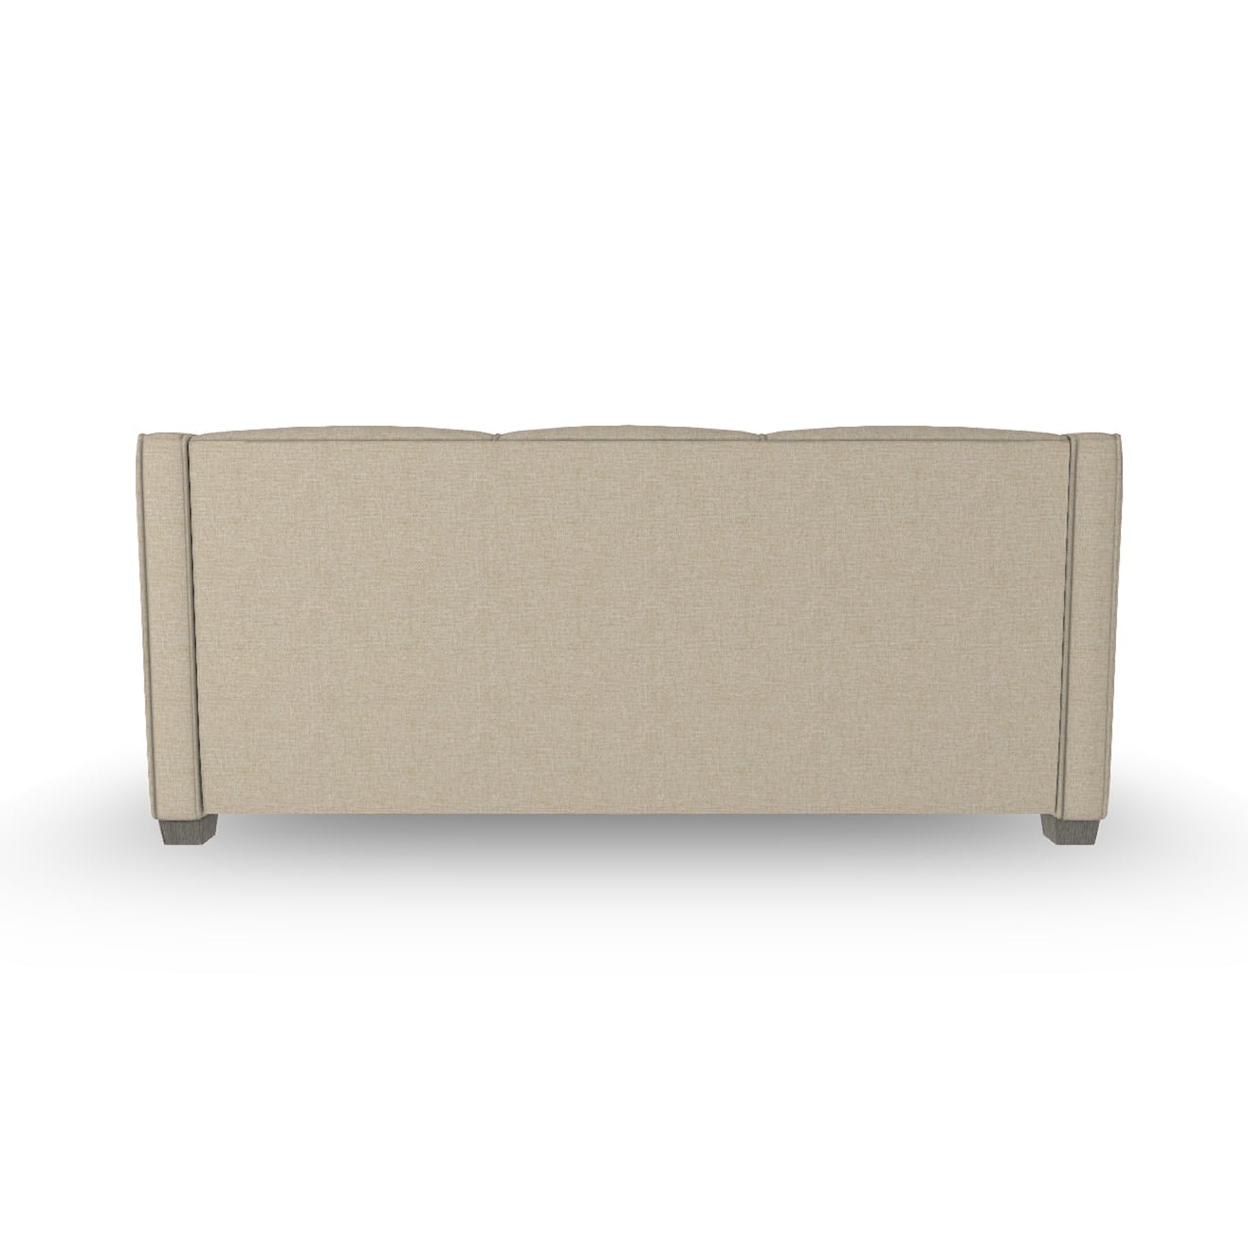 Bravo Furniture Marinette Full Stationary Memory Foam Sleeper Sofa